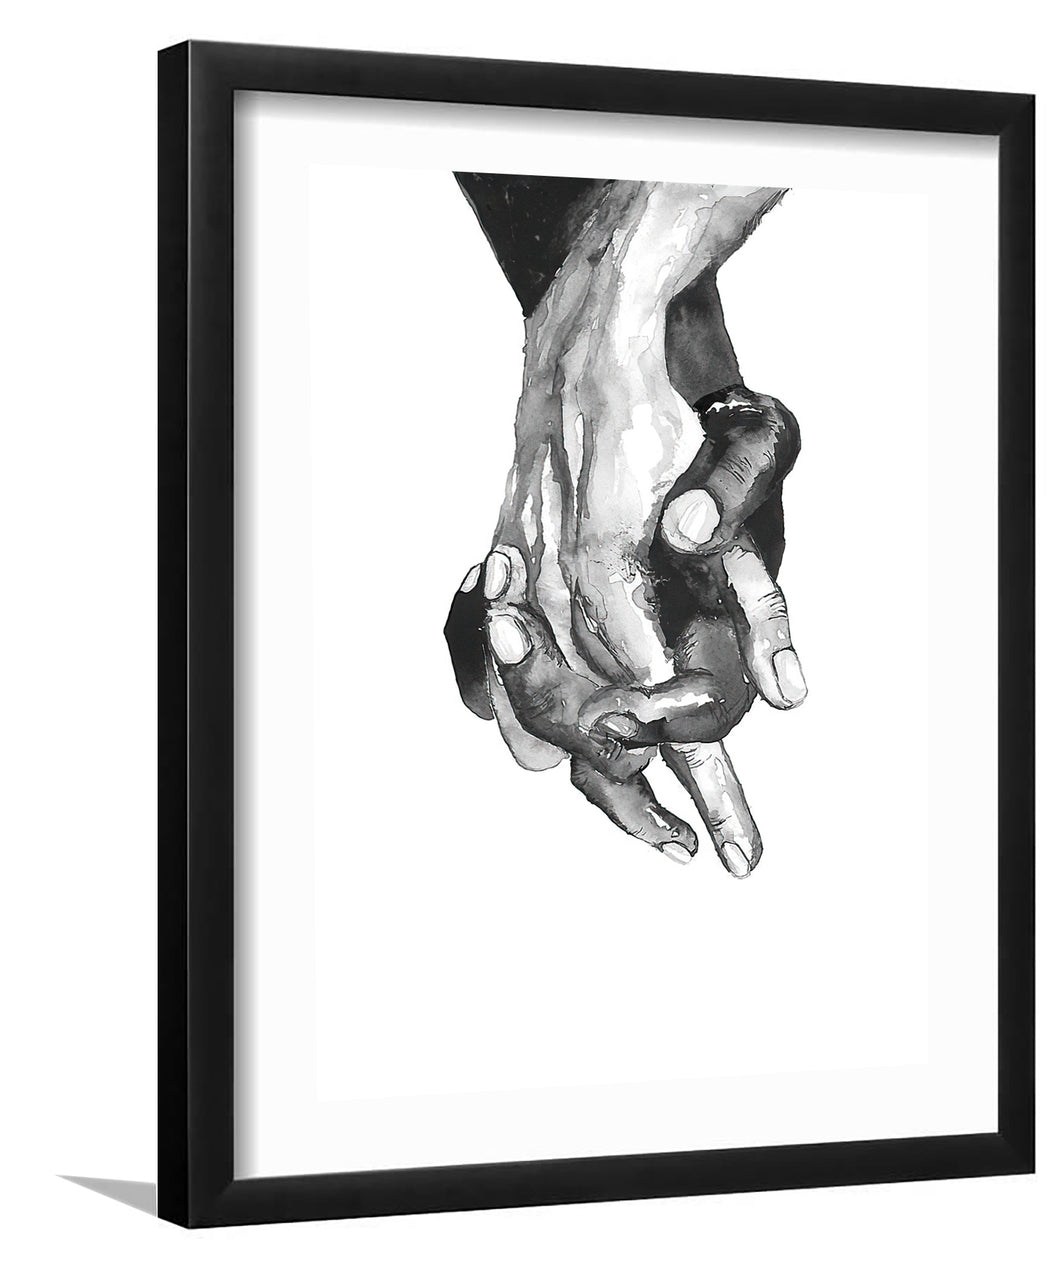 Hands-Black and white Art, Art Print, Plexiglass Cover